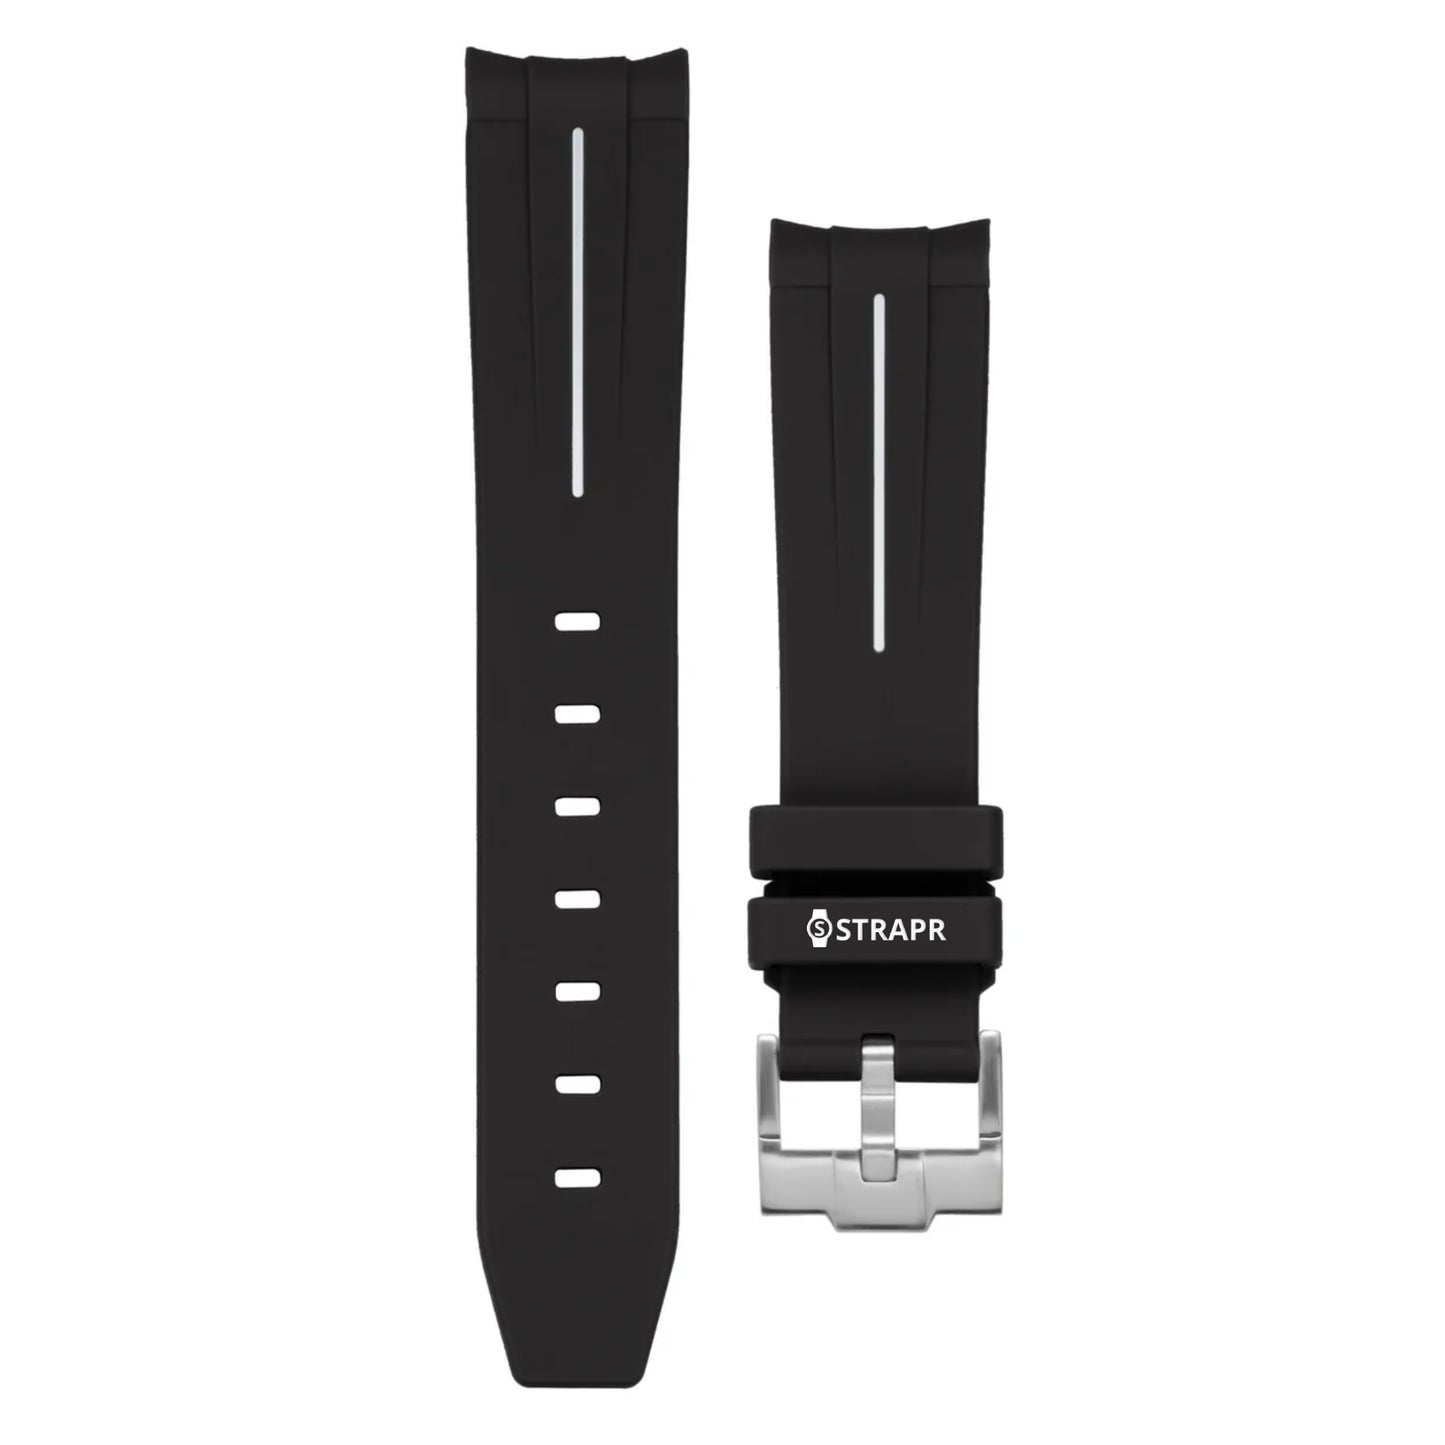 Omega Swatch MoonSwatch correa strap negro y blanco